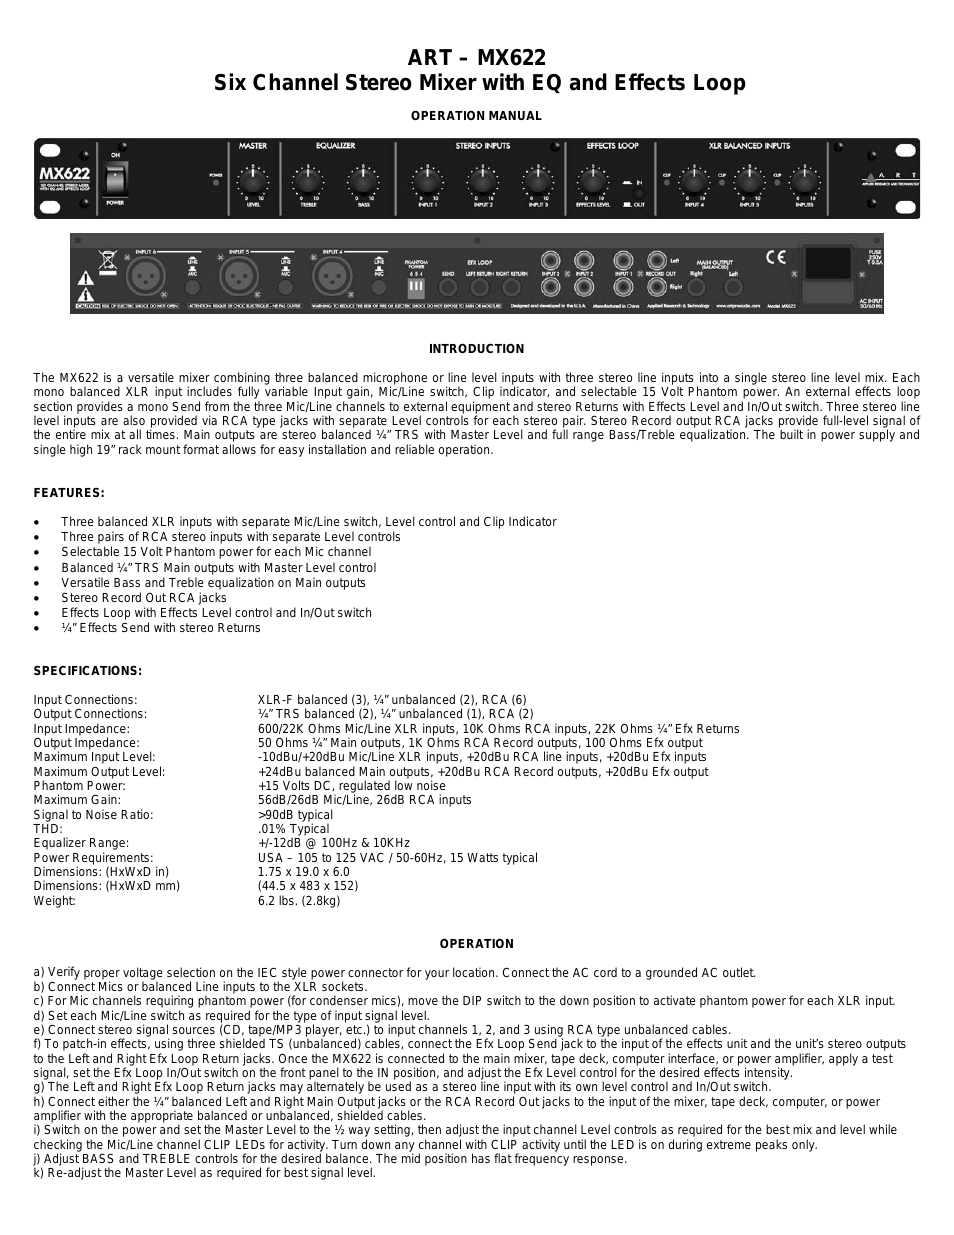 MX622 - 6 Ch (1U) Stereo Mixer w/ EQ/EFX Loop